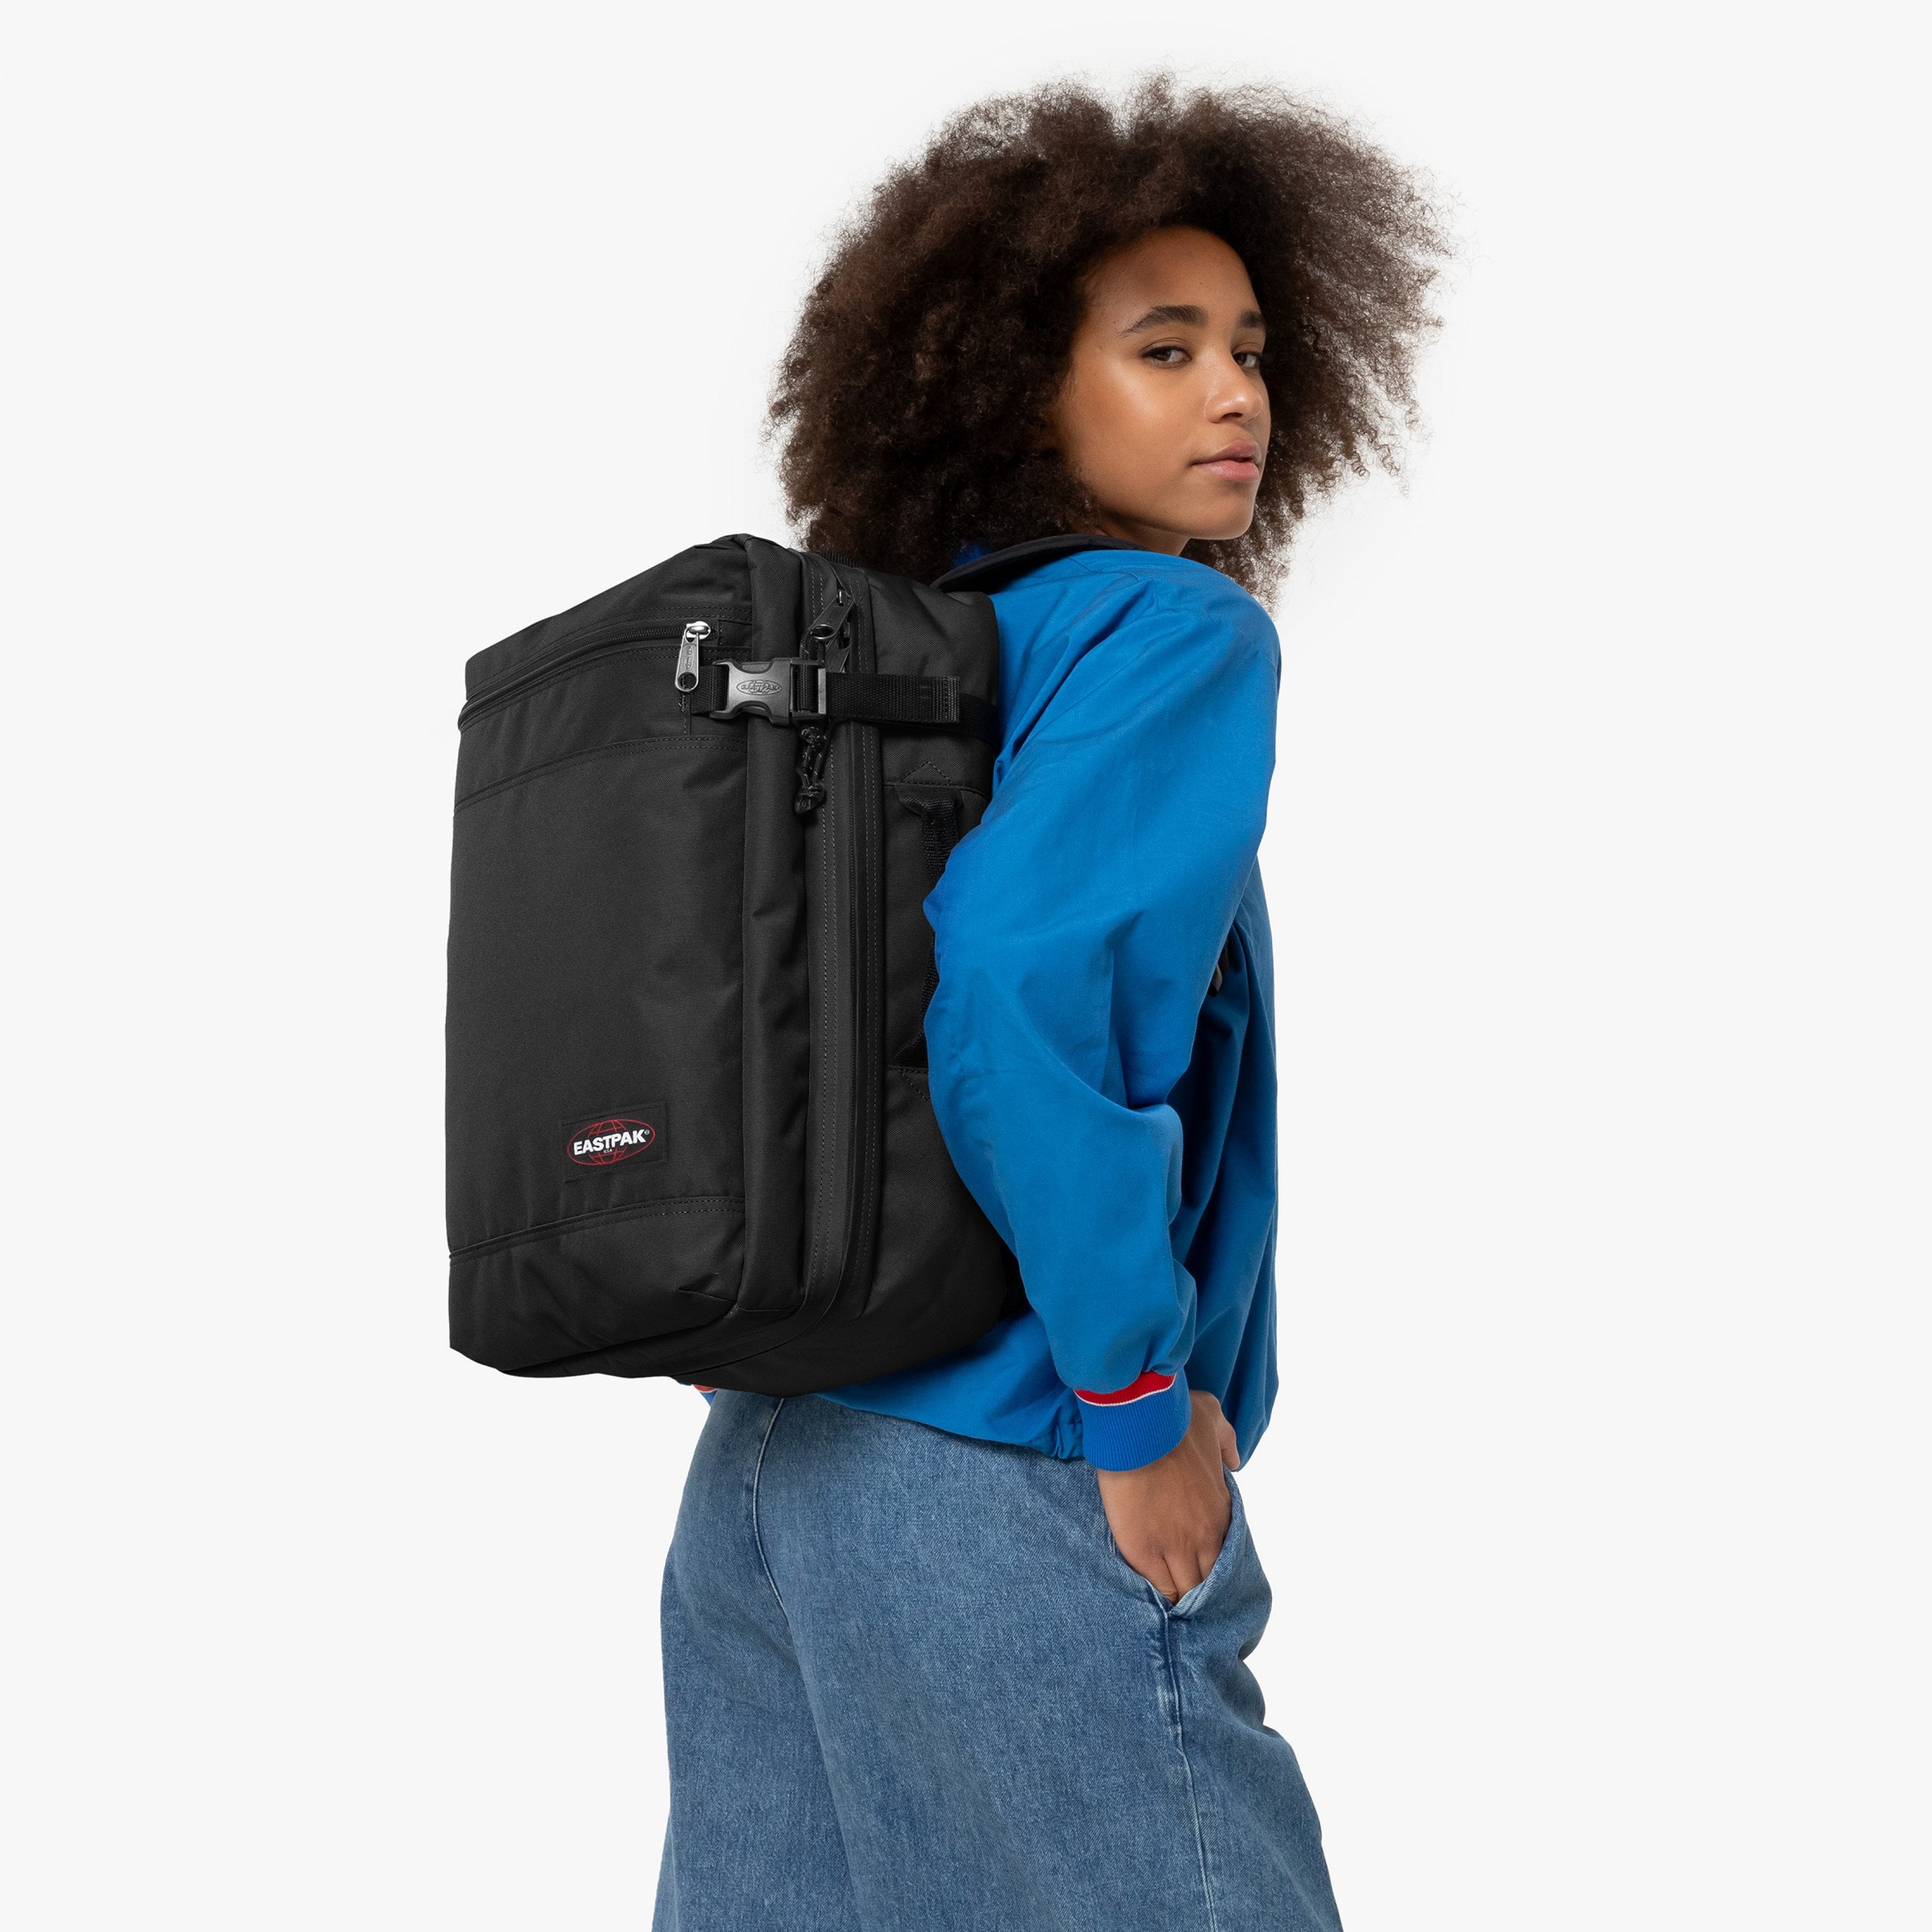 Eastpak-Transit'R Pack-Cabin sized convertible backpack-Black-EK0A5BHI0081